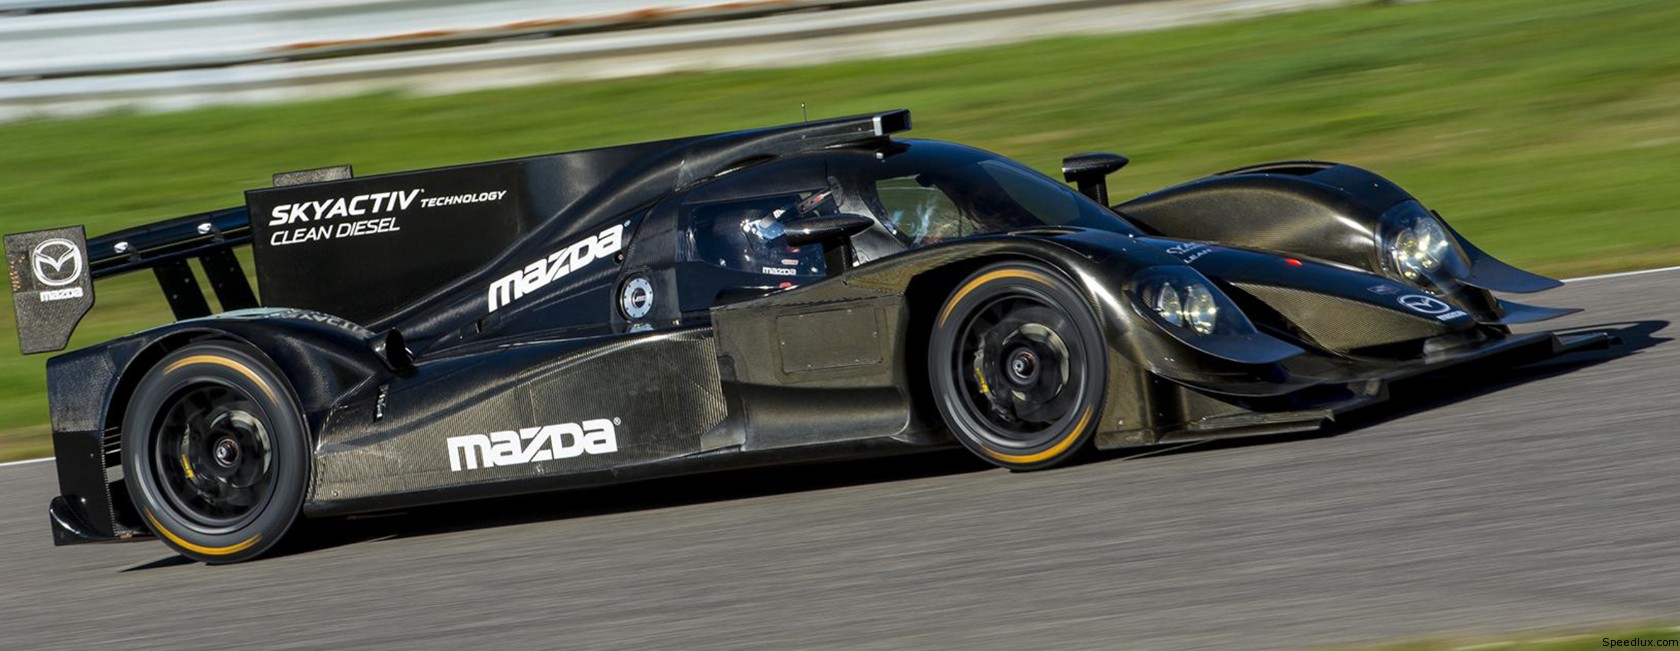 2014 Mazda SKYACTIV-D Prototype race car revealed for the 2014 TUDOR